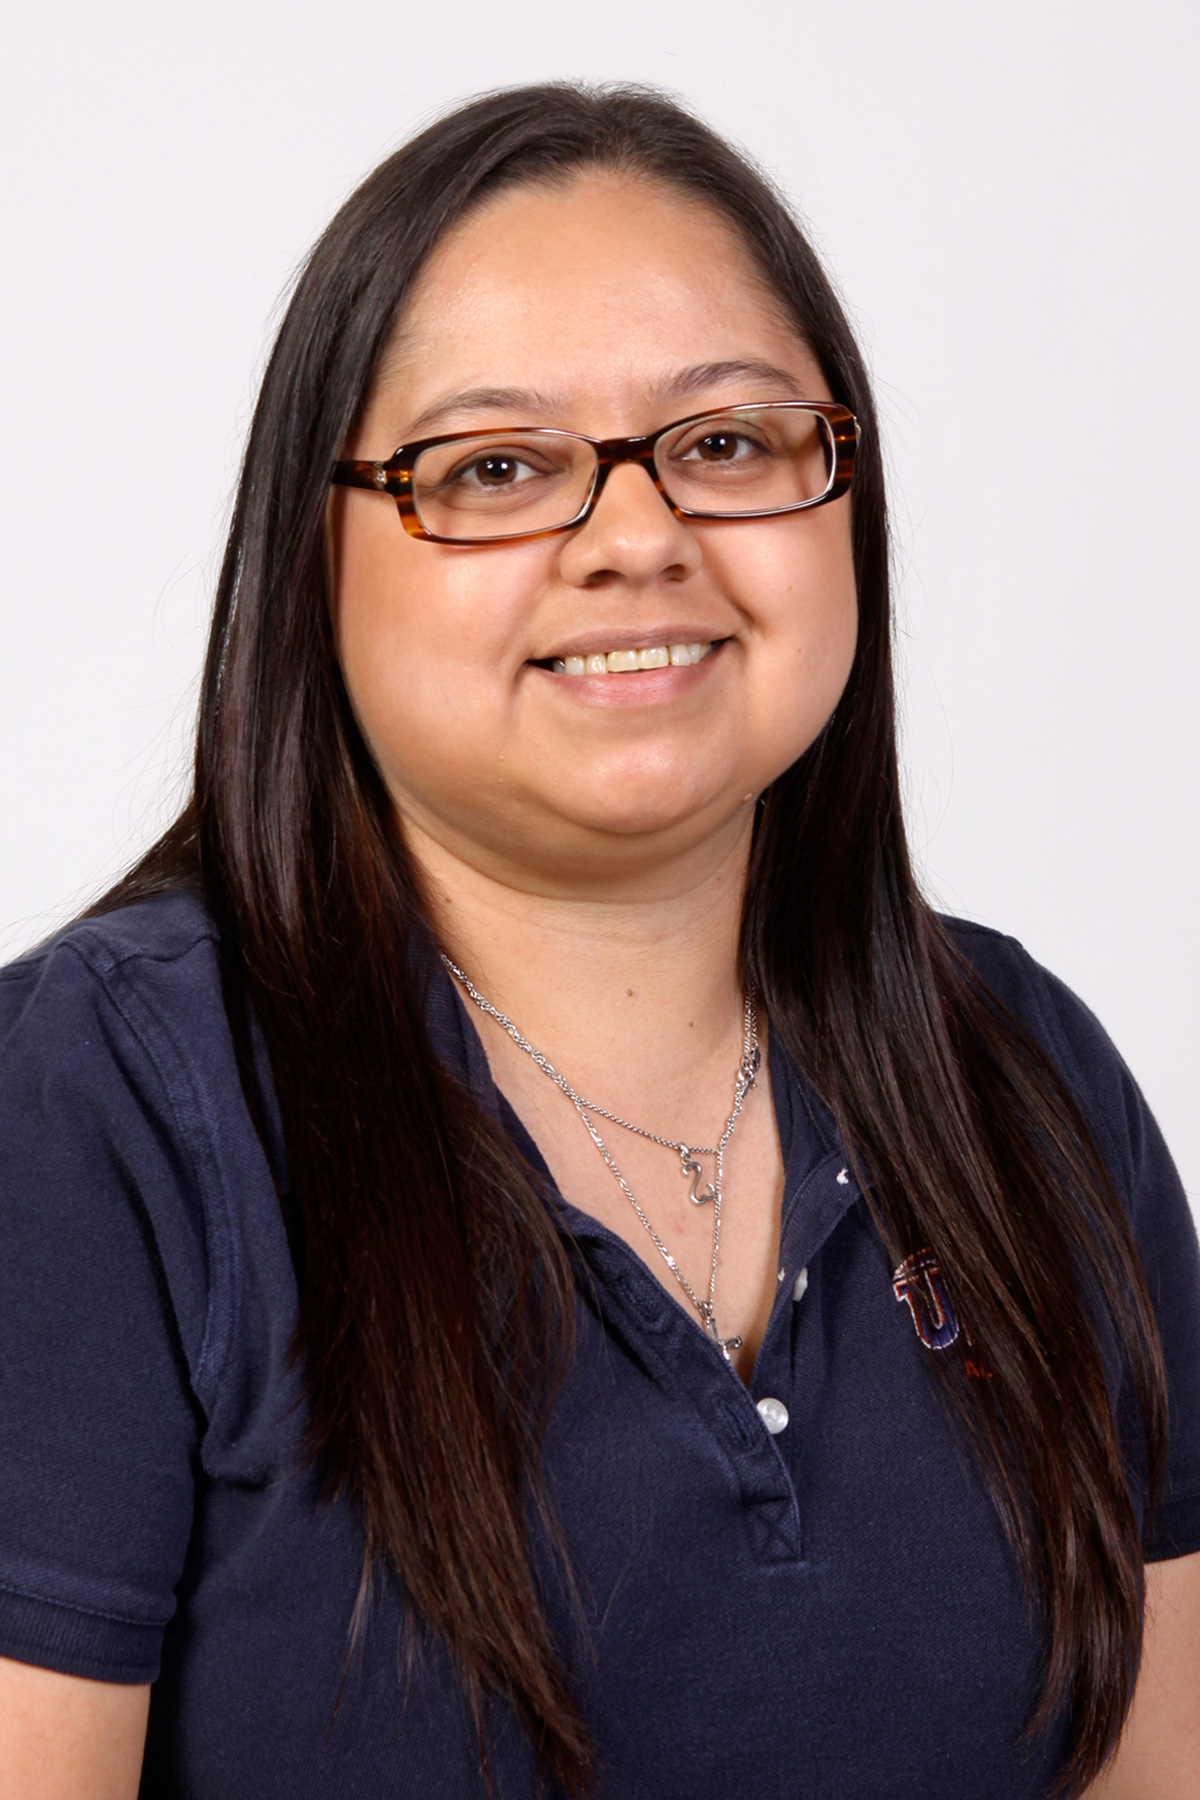 Rachel Serrano, M.A. – Administrative Services Officer